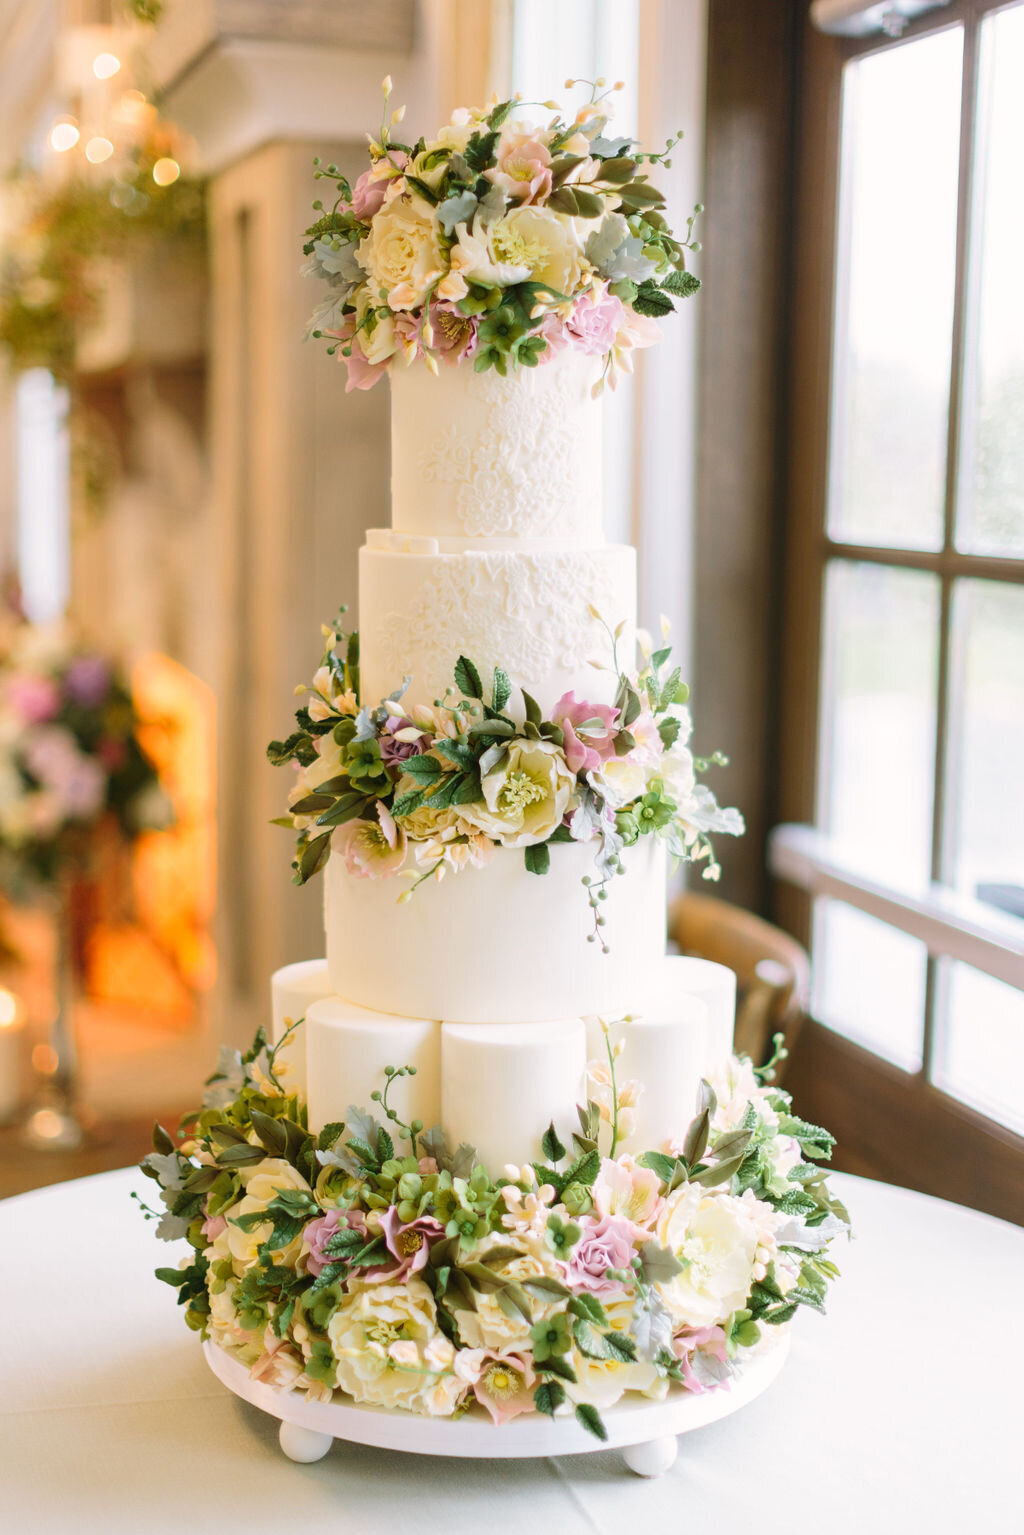 White three tiered wedding cake with flowers